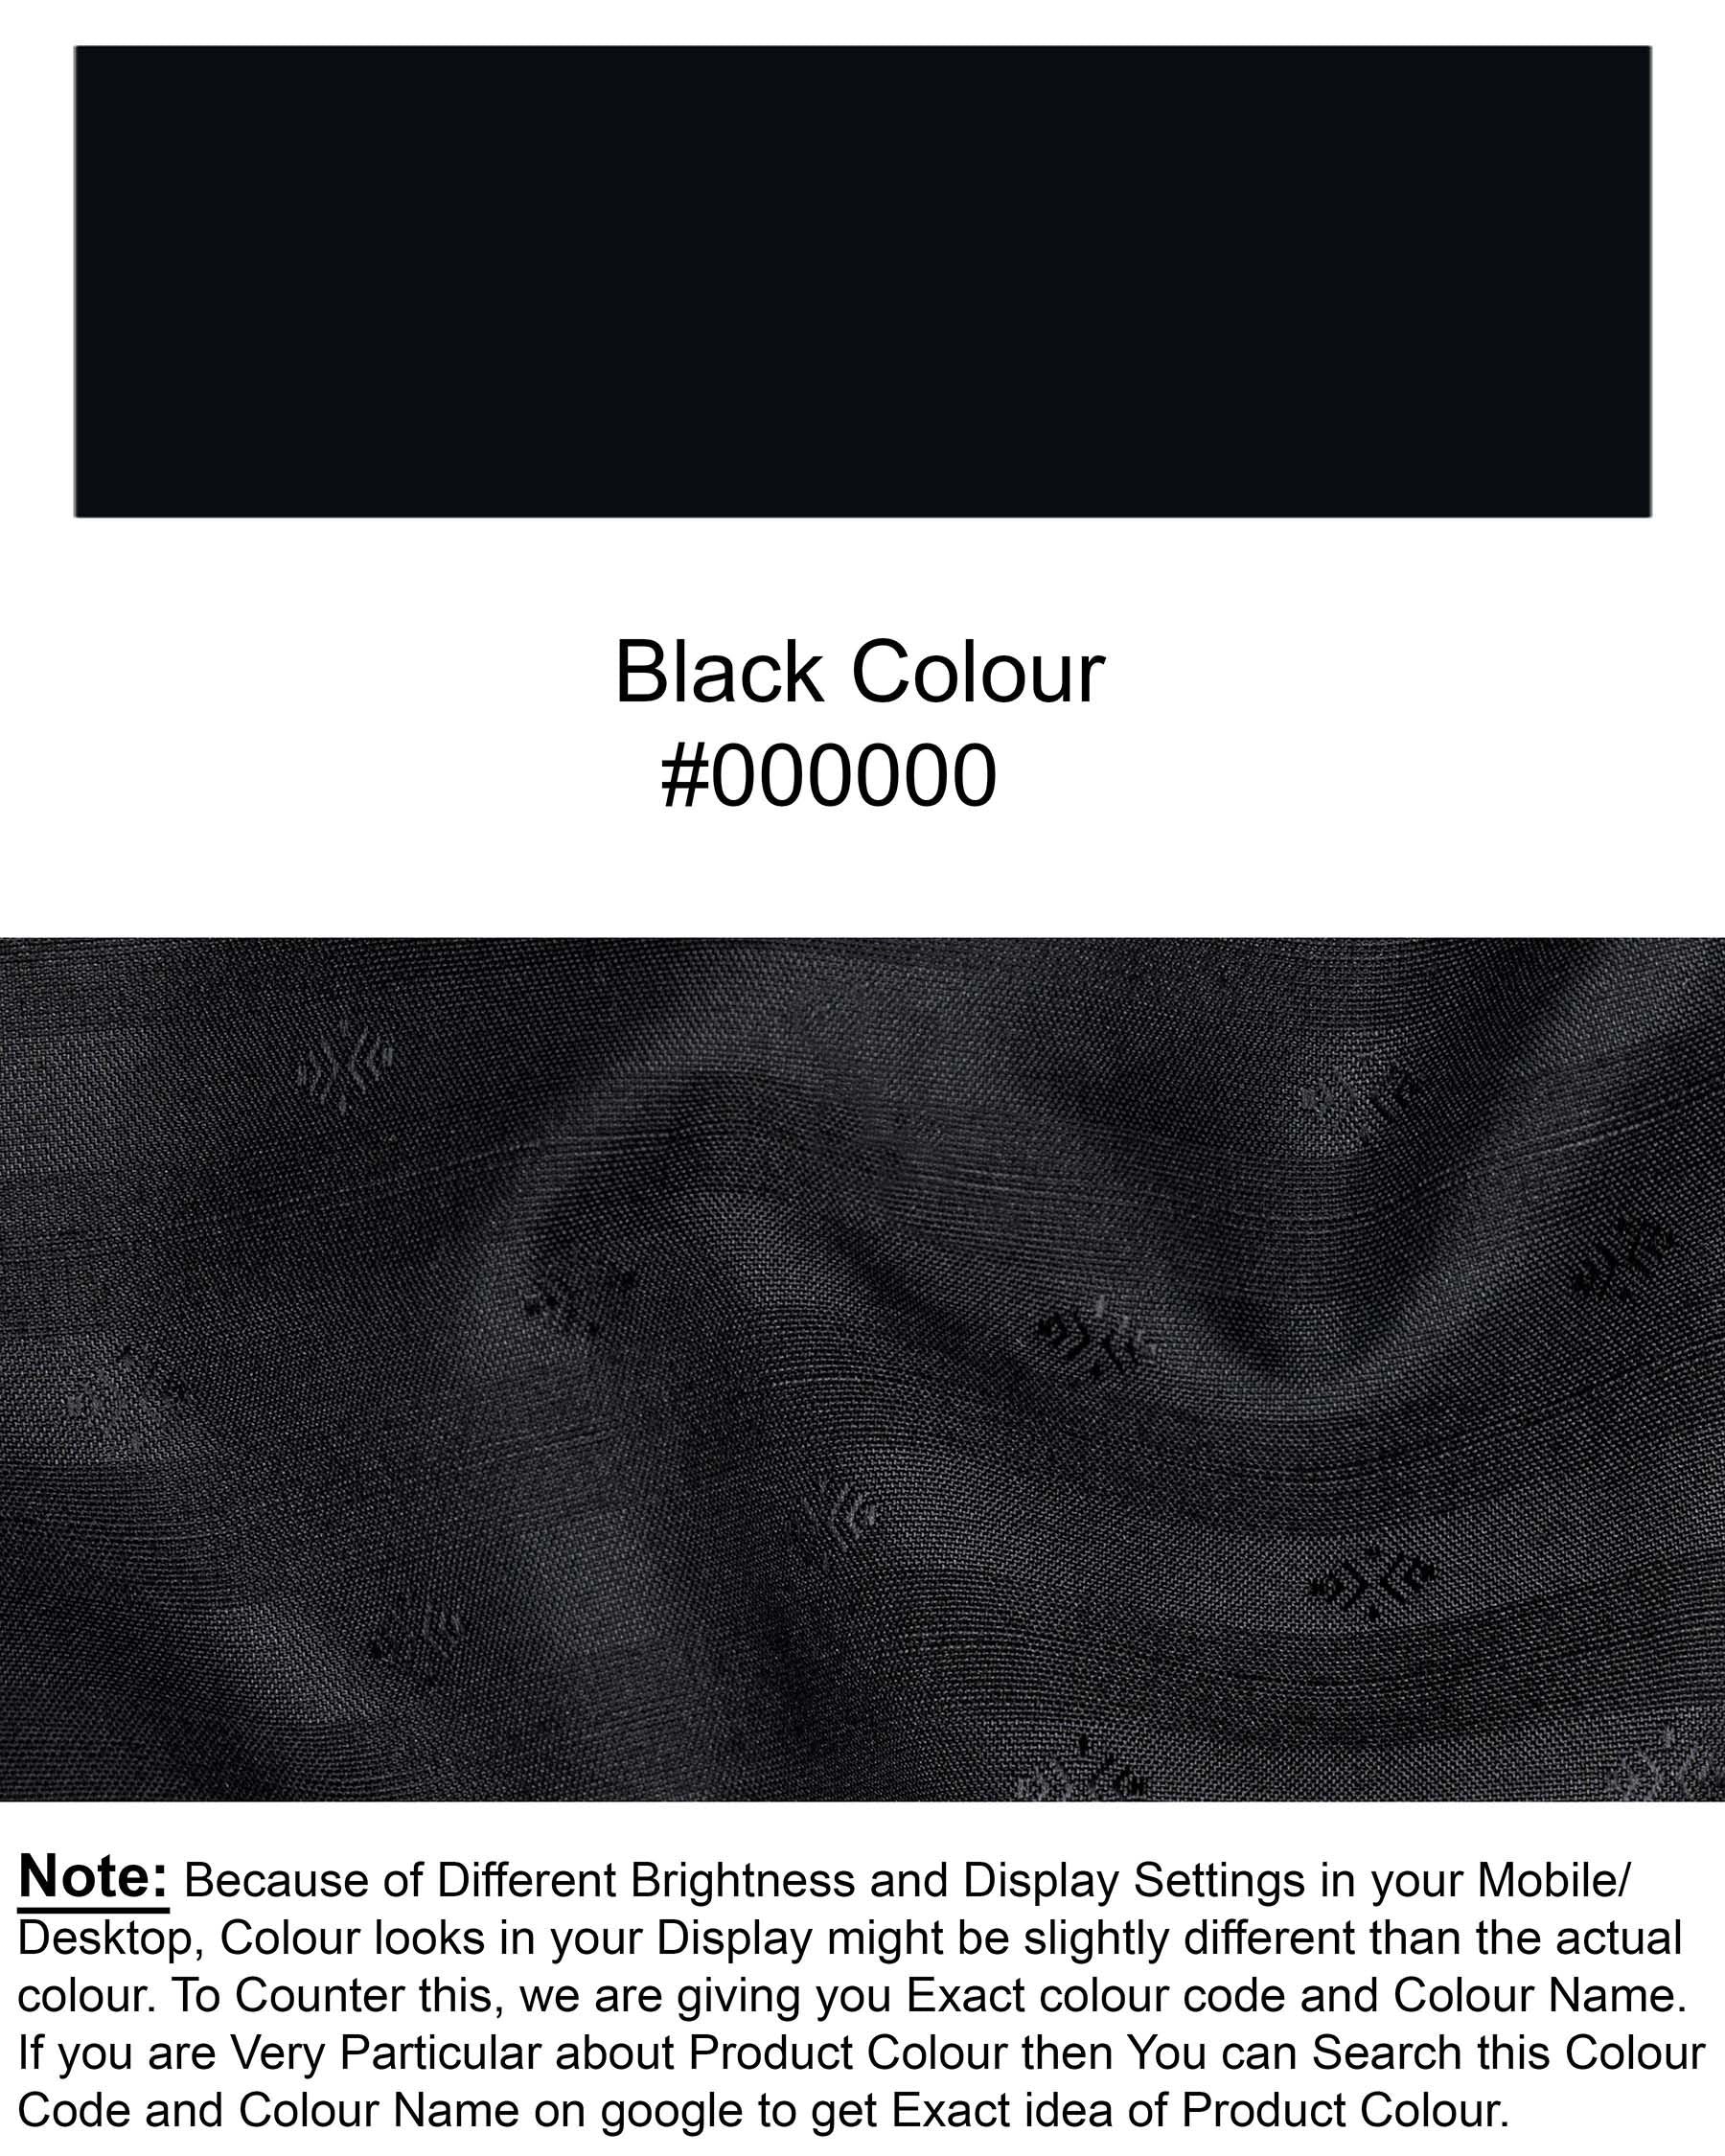 Jade Black Dobby Textured Premium Giza Cotton Shirt 6810-BLK-38,6810-BLK-38,6810-BLK-39,6810-BLK-39,6810-BLK-40,6810-BLK-40,6810-BLK-42,6810-BLK-42,6810-BLK-44,6810-BLK-44,6810-BLK-46,6810-BLK-46,6810-BLK-48,6810-BLK-48,6810-BLK-50,6810-BLK-50,6810-BLK-52,6810-BLK-52